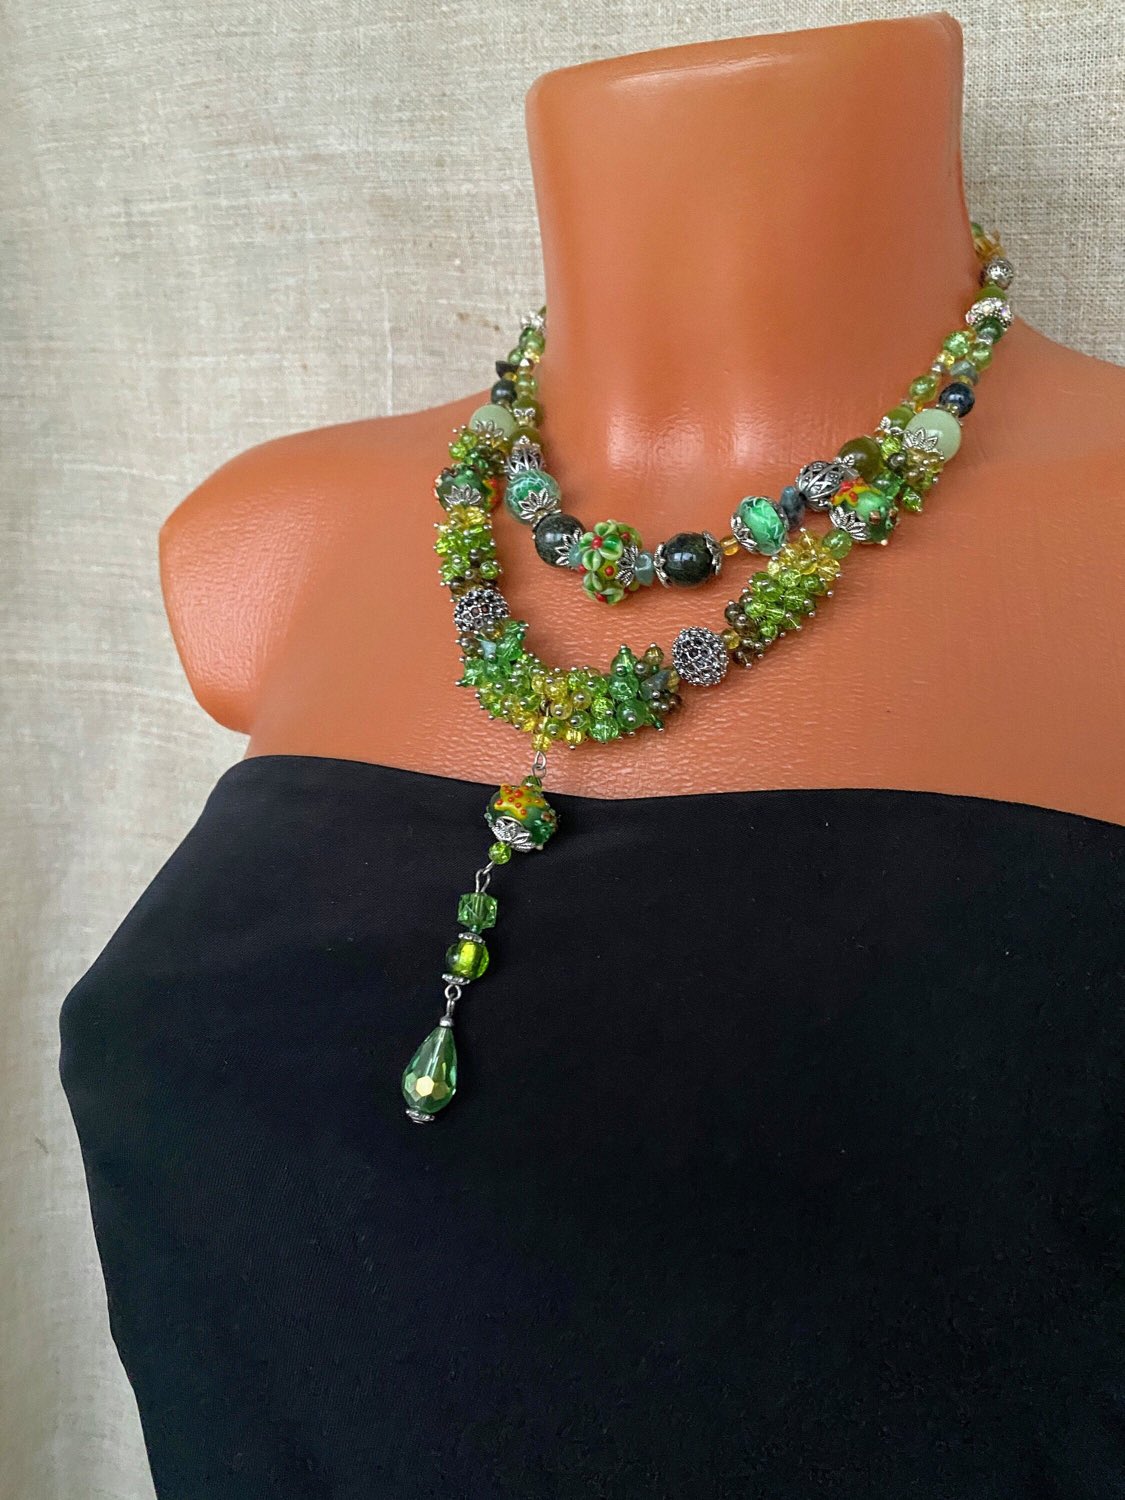 Chunky pendant necklace Multi gemstone pendant necklace Jasper jewelry Handmade gemstone necklace jewelry Boho festival necklace